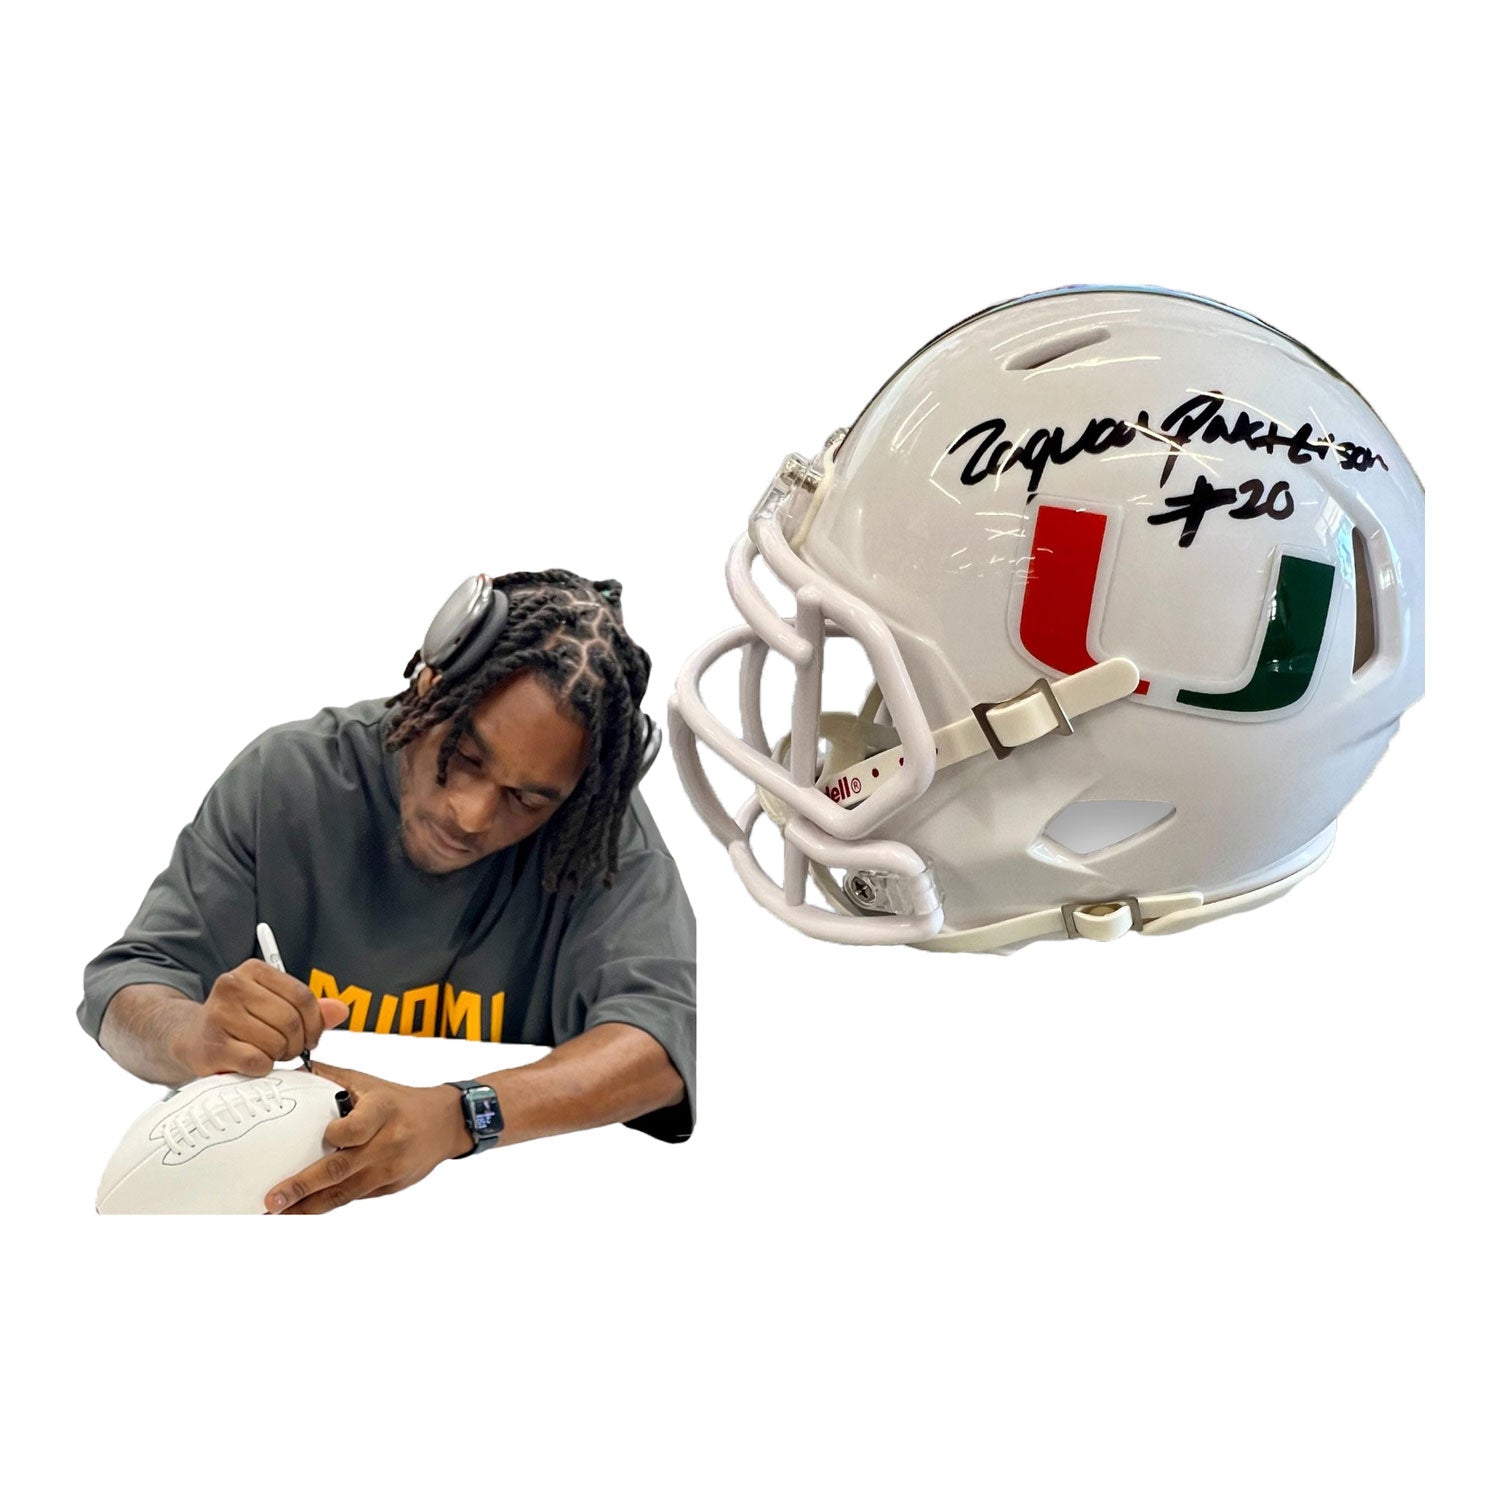 Miami Hurricanes Student Athlete #20 Zaquan Patterson Mini Football Helmet - Main View